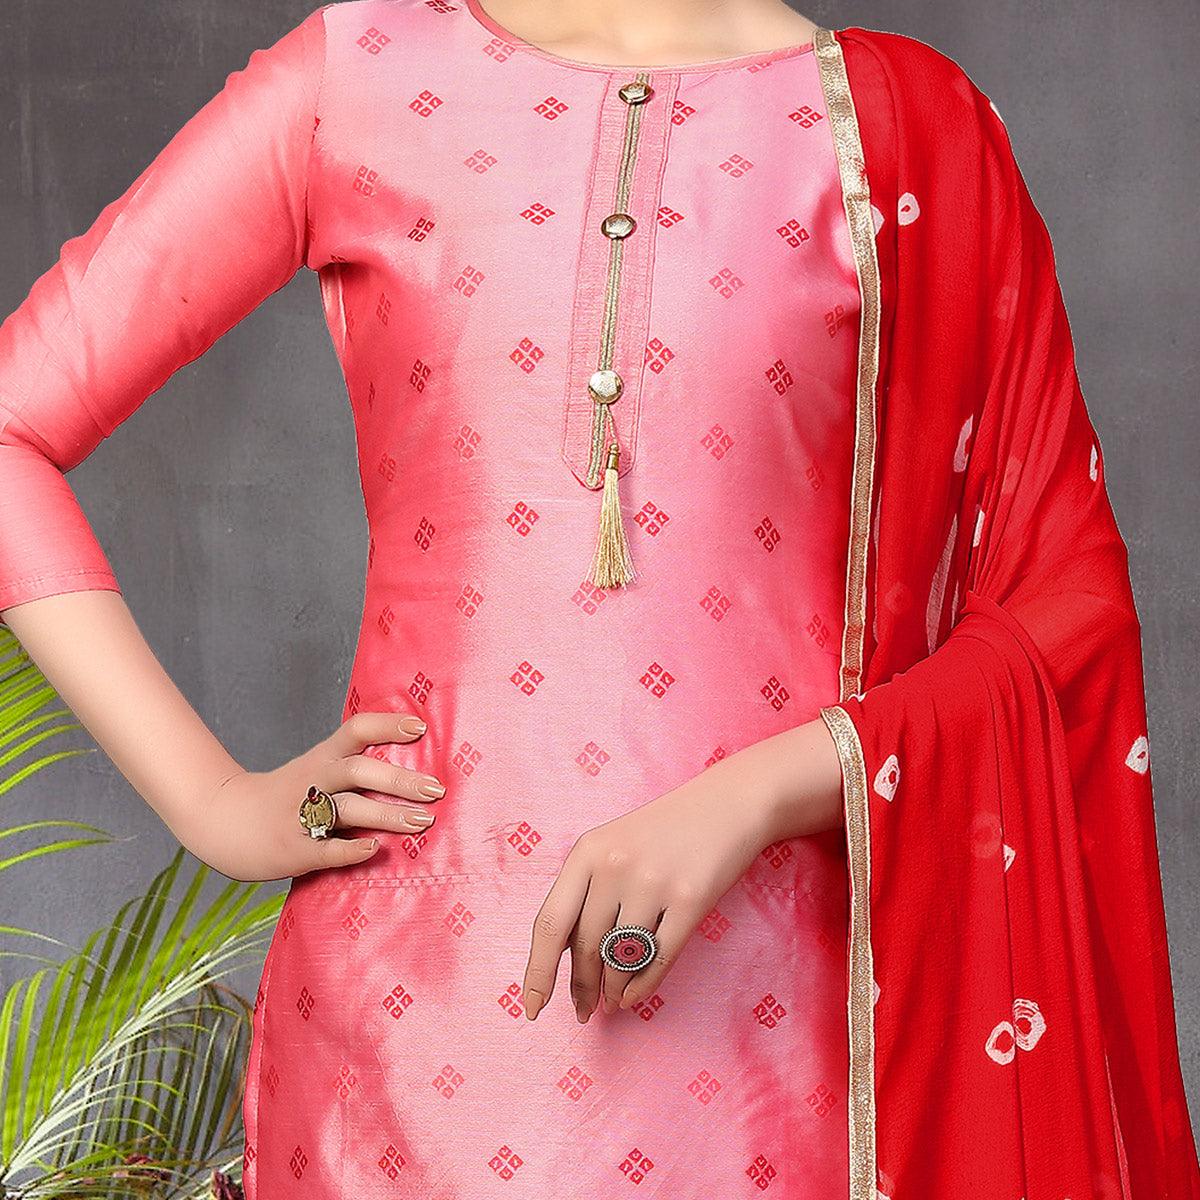 Entrancing Pink Colored Festive Wear Woven Heavy Banarasi Silk Dress Material - Peachmode